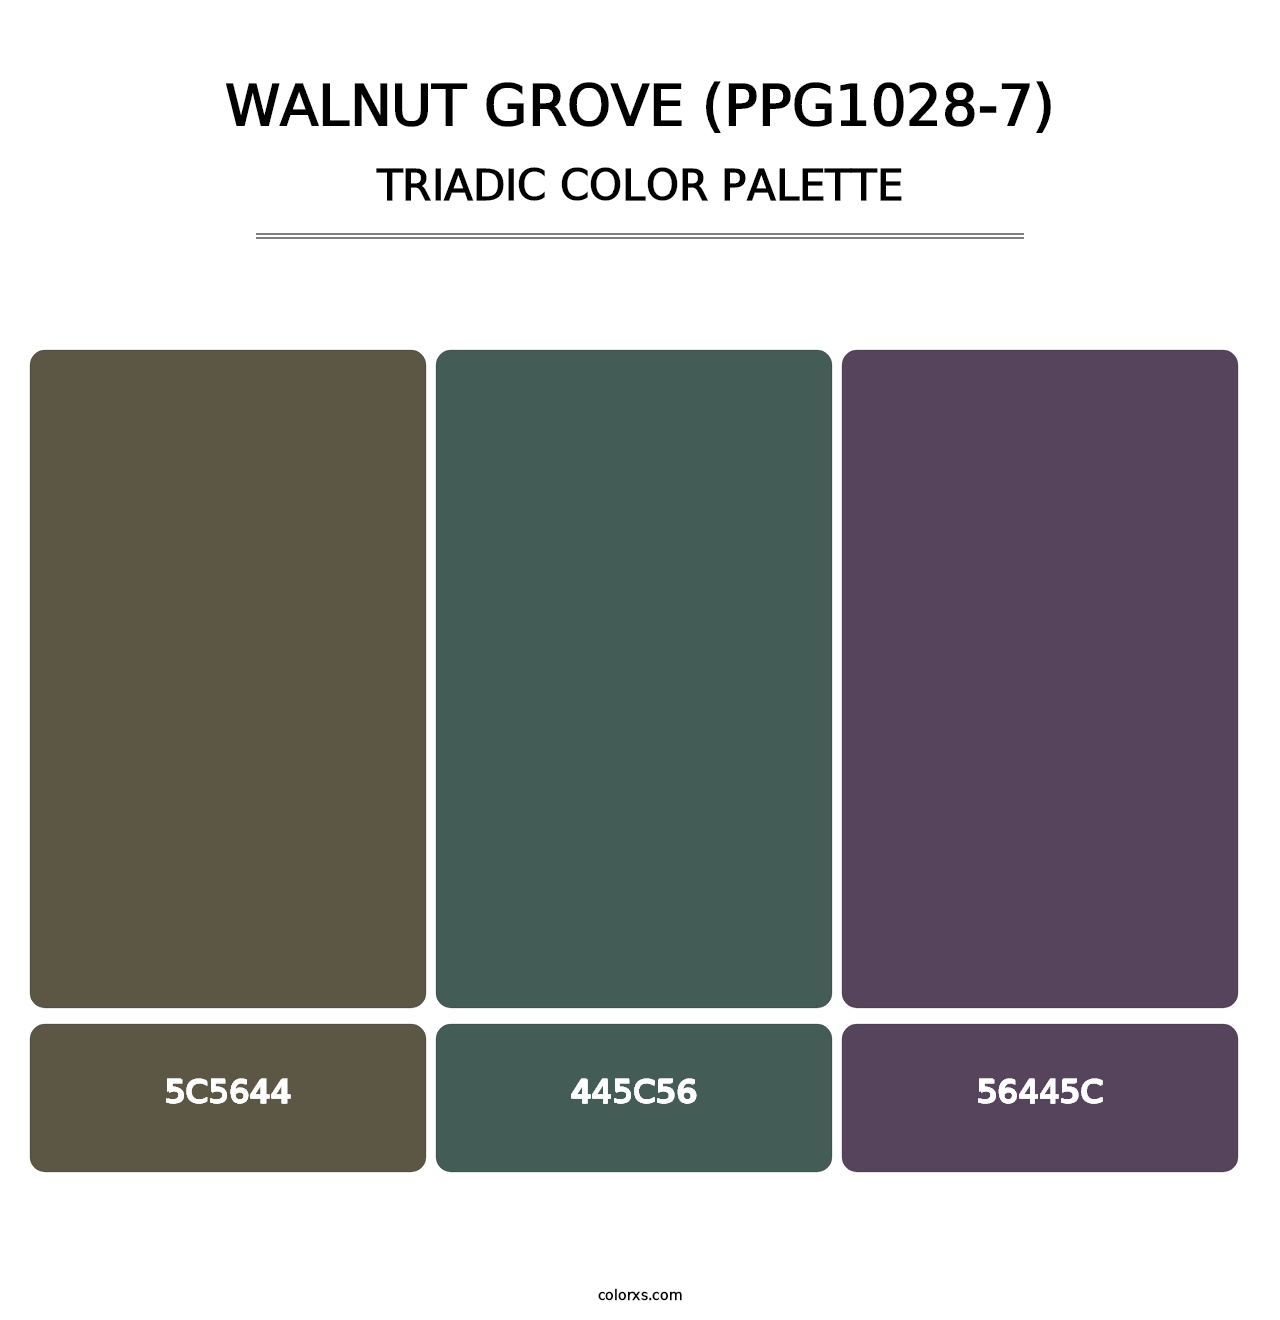 Walnut Grove (PPG1028-7) - Triadic Color Palette